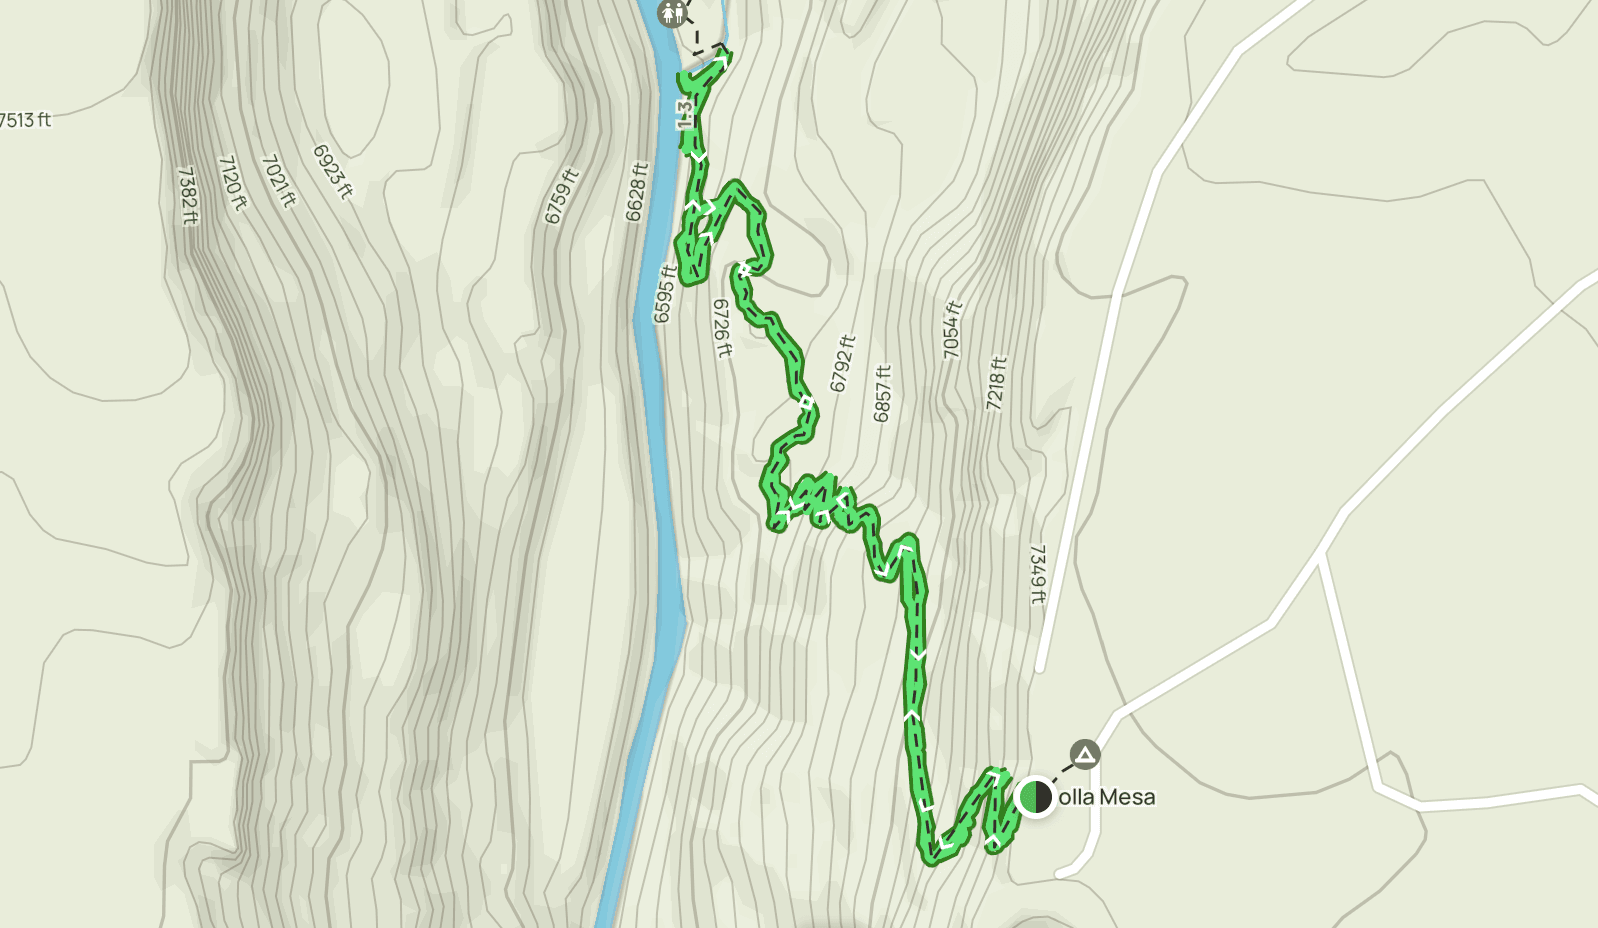 Cebolla Mesa hiking trail map. 